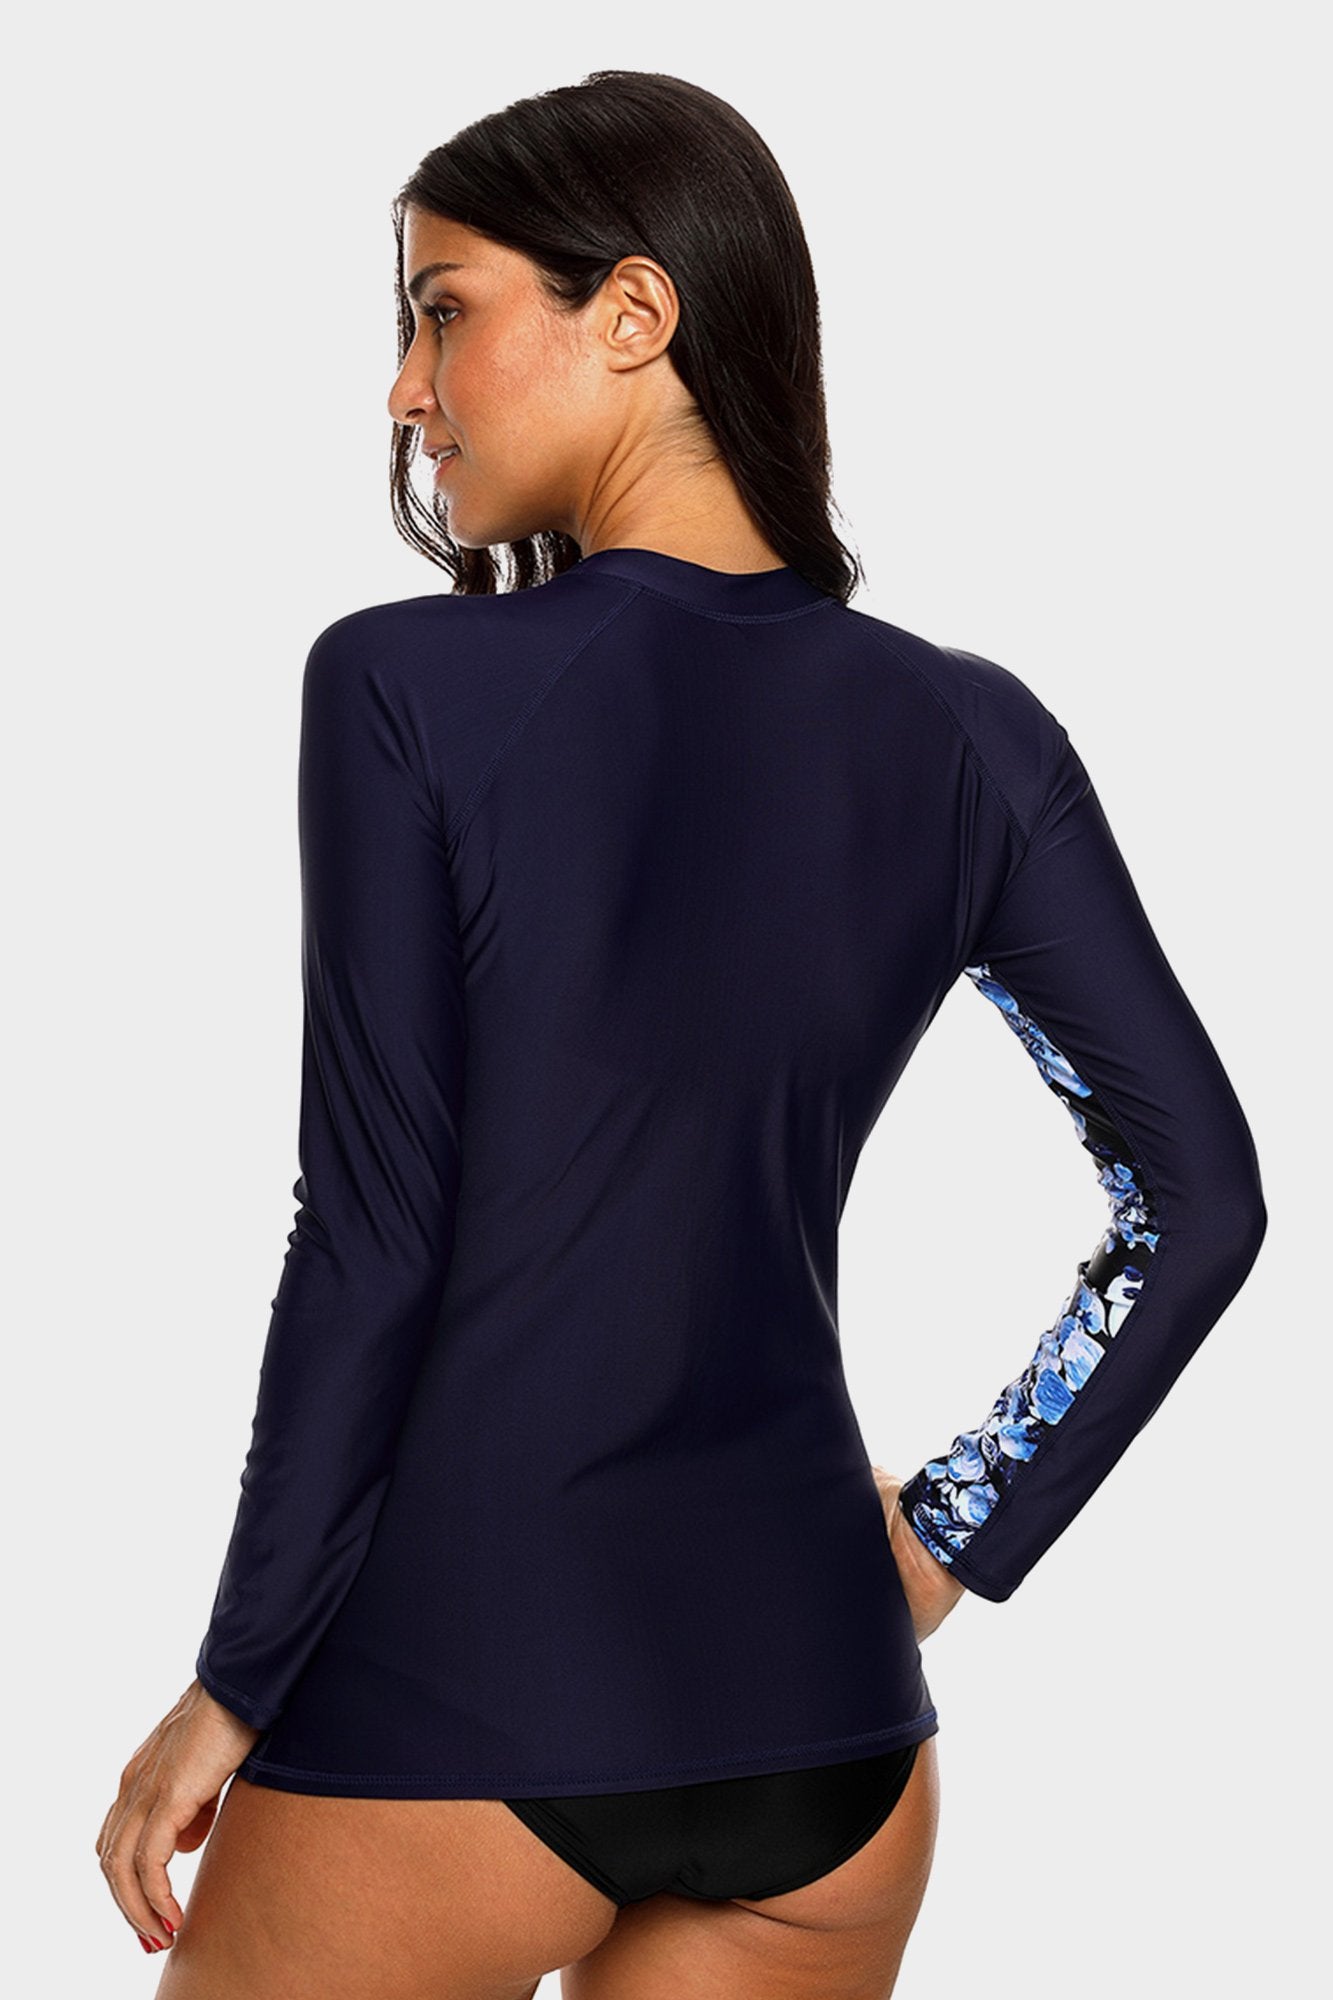 Attraco Navy Women's Floral Printed Zipper UPF 50+ Rash Guard-Attraco | Fashion Outdoor Clothing